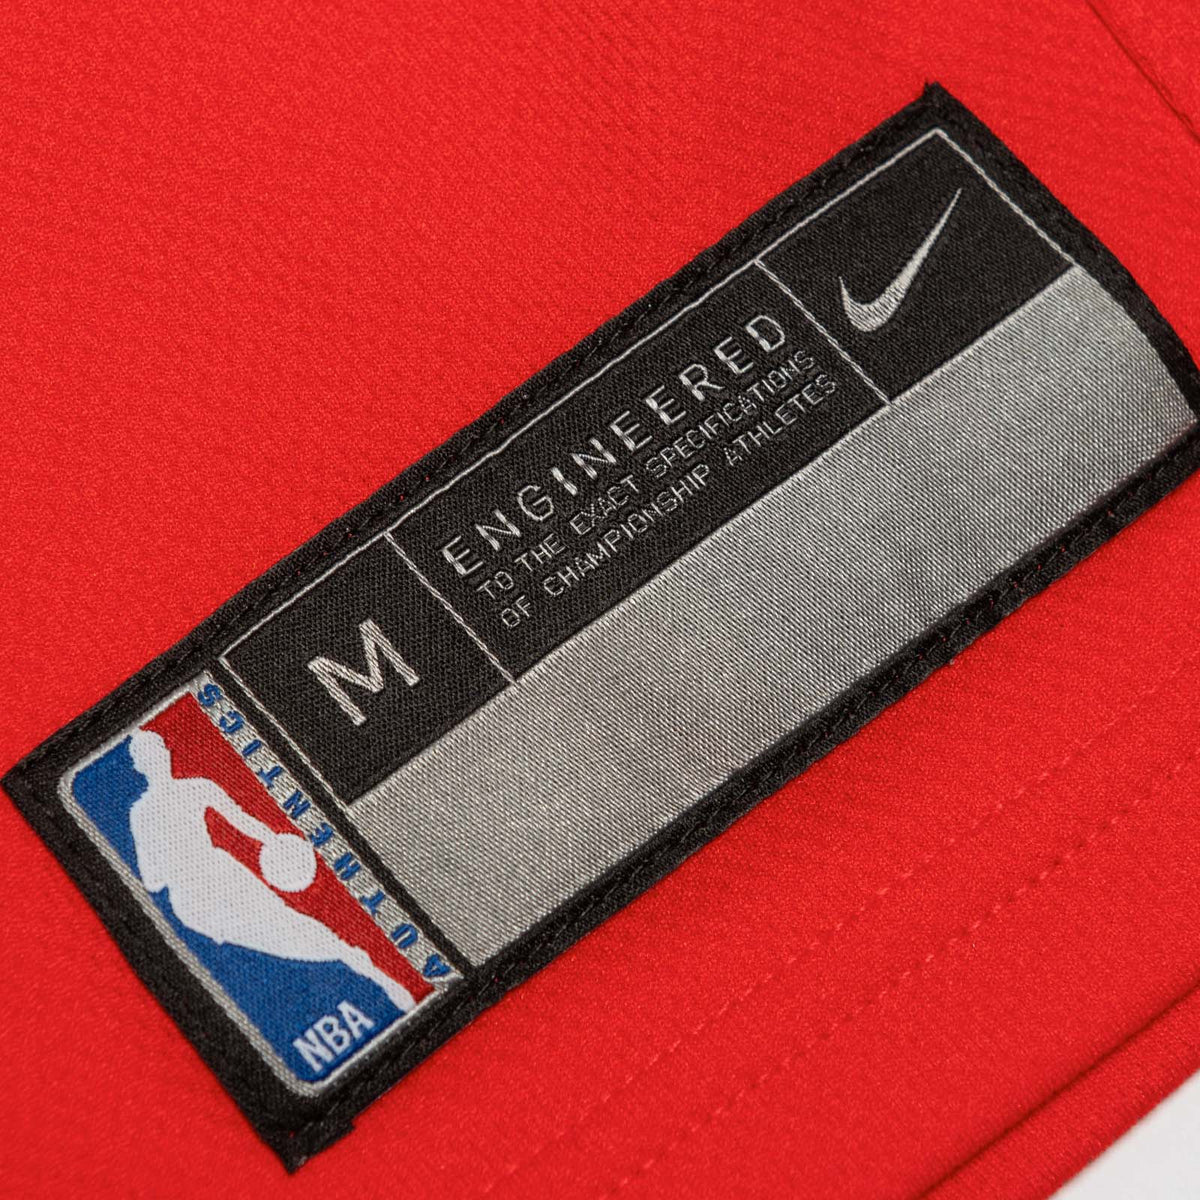 Chicago Bulls DeMar DeRozan Nike Association Swingman Jersey